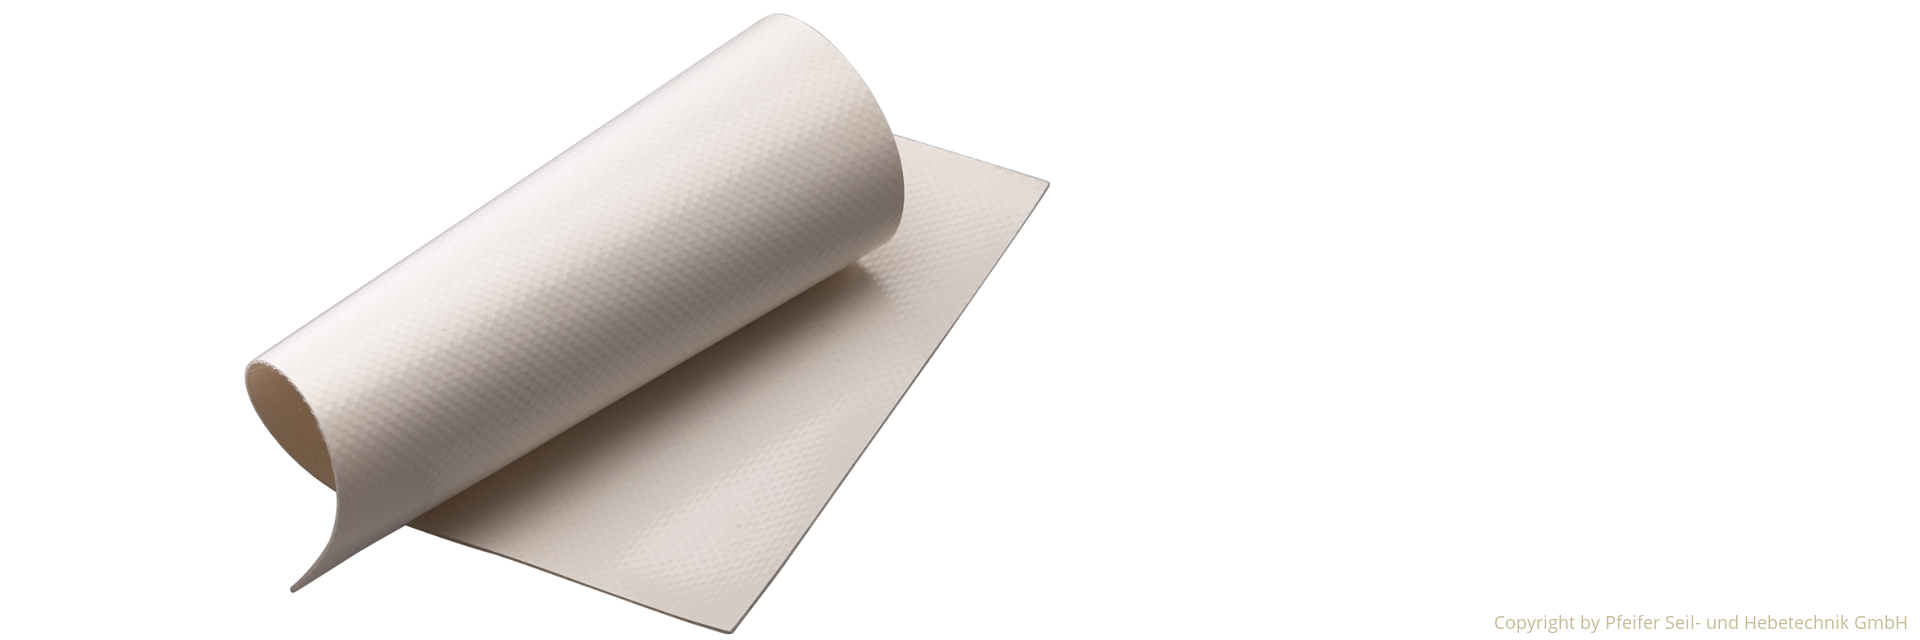 PVC-PES Membrane, Vinyl Coated Polyester Membrane, PVC coated fabric